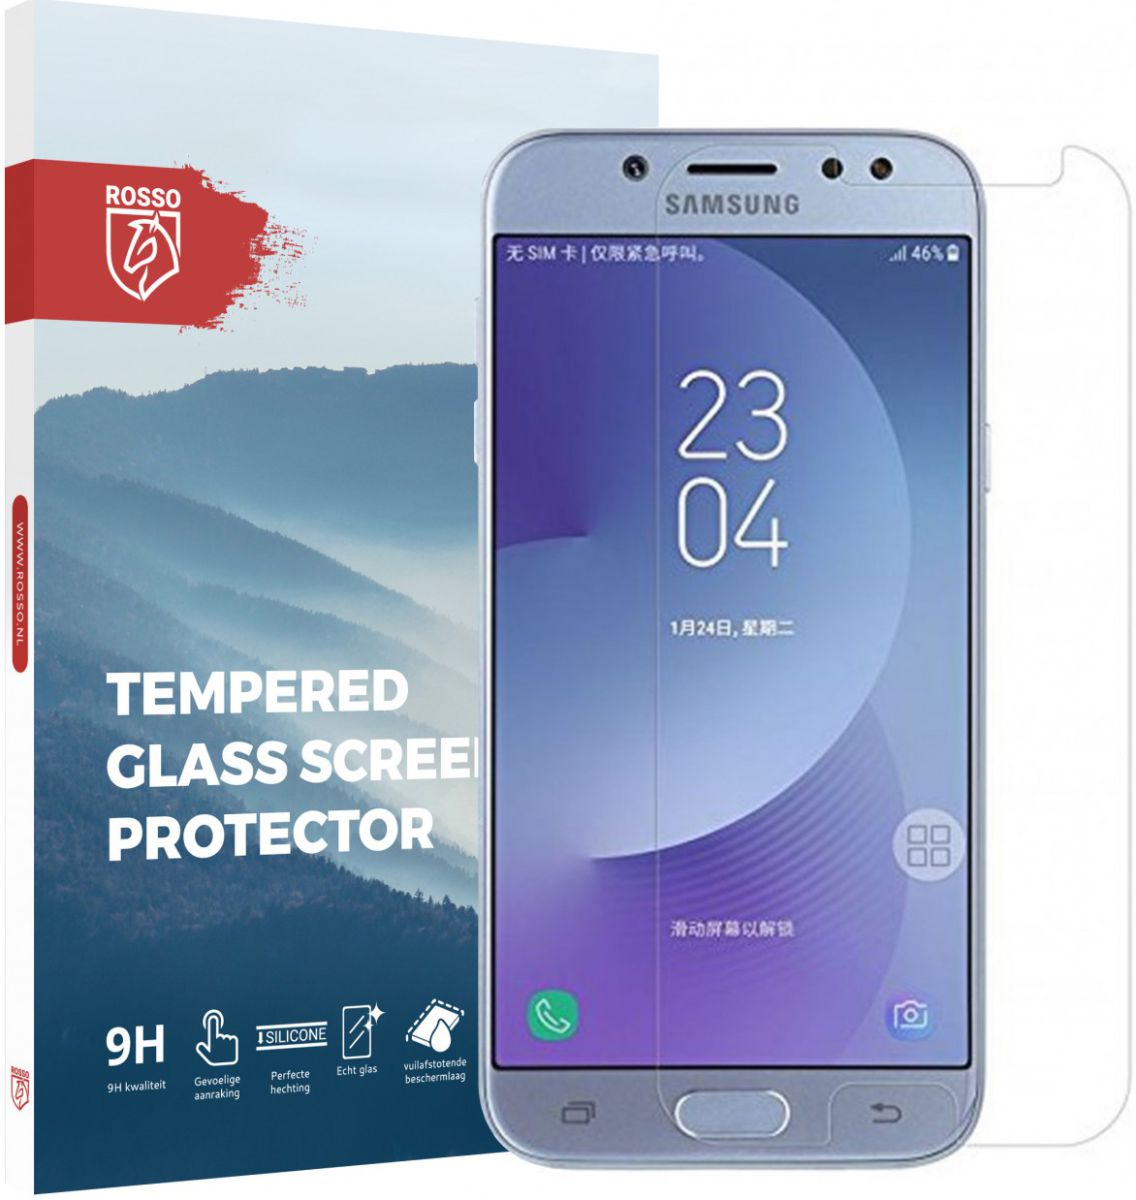 Perth Blackborough Stimulans Brochure Rosso Samsung Galaxy J5 2017 9H Tempered Glass Screen Protector | GSMpunt.nl